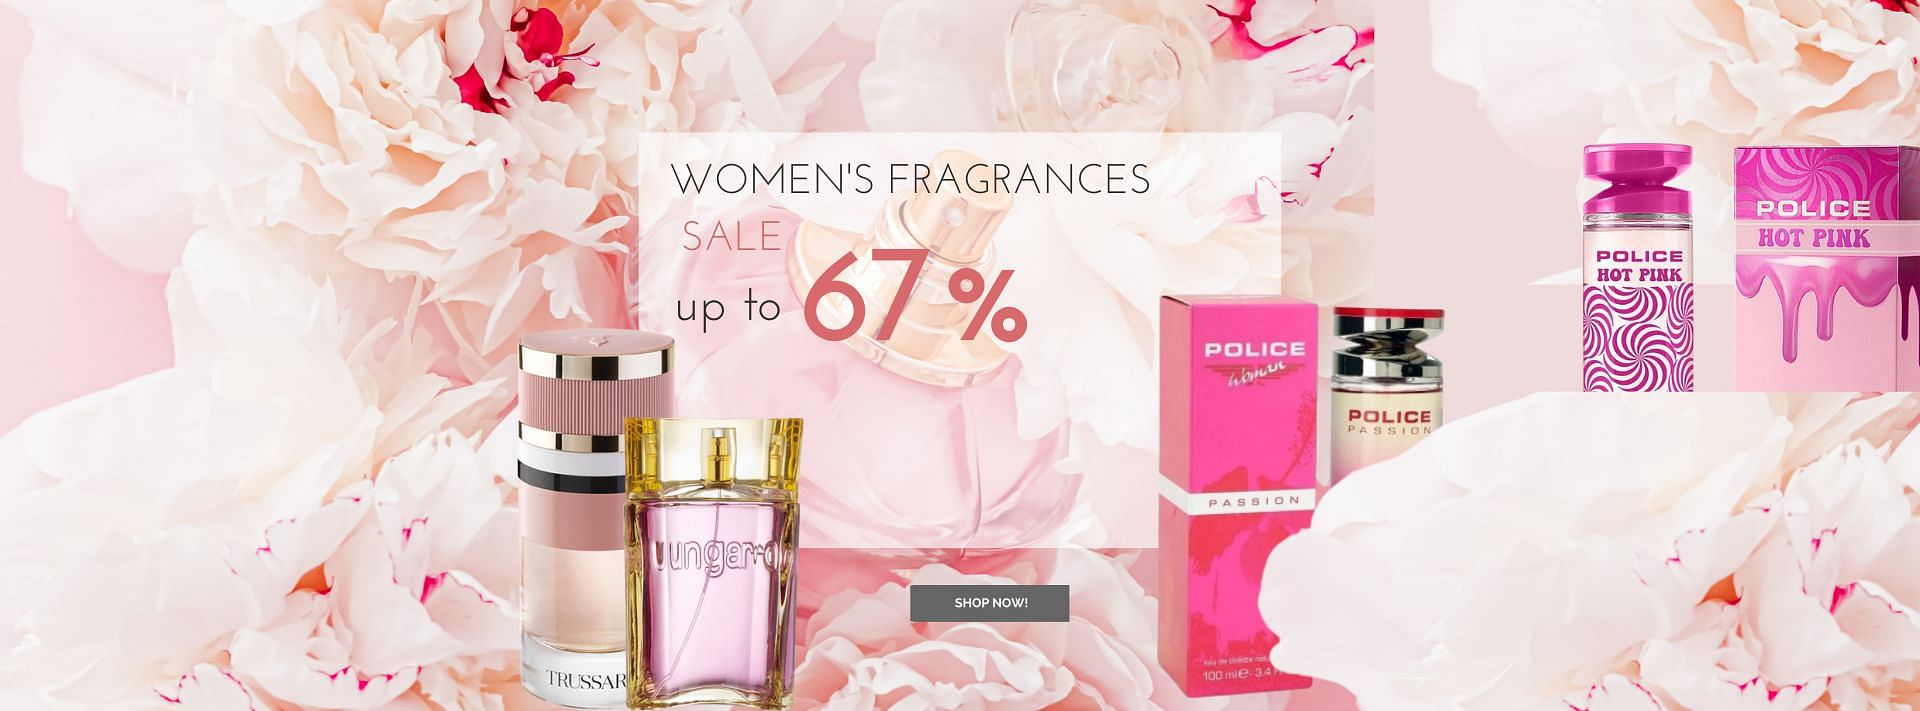 women's fragrances sale up to 67%